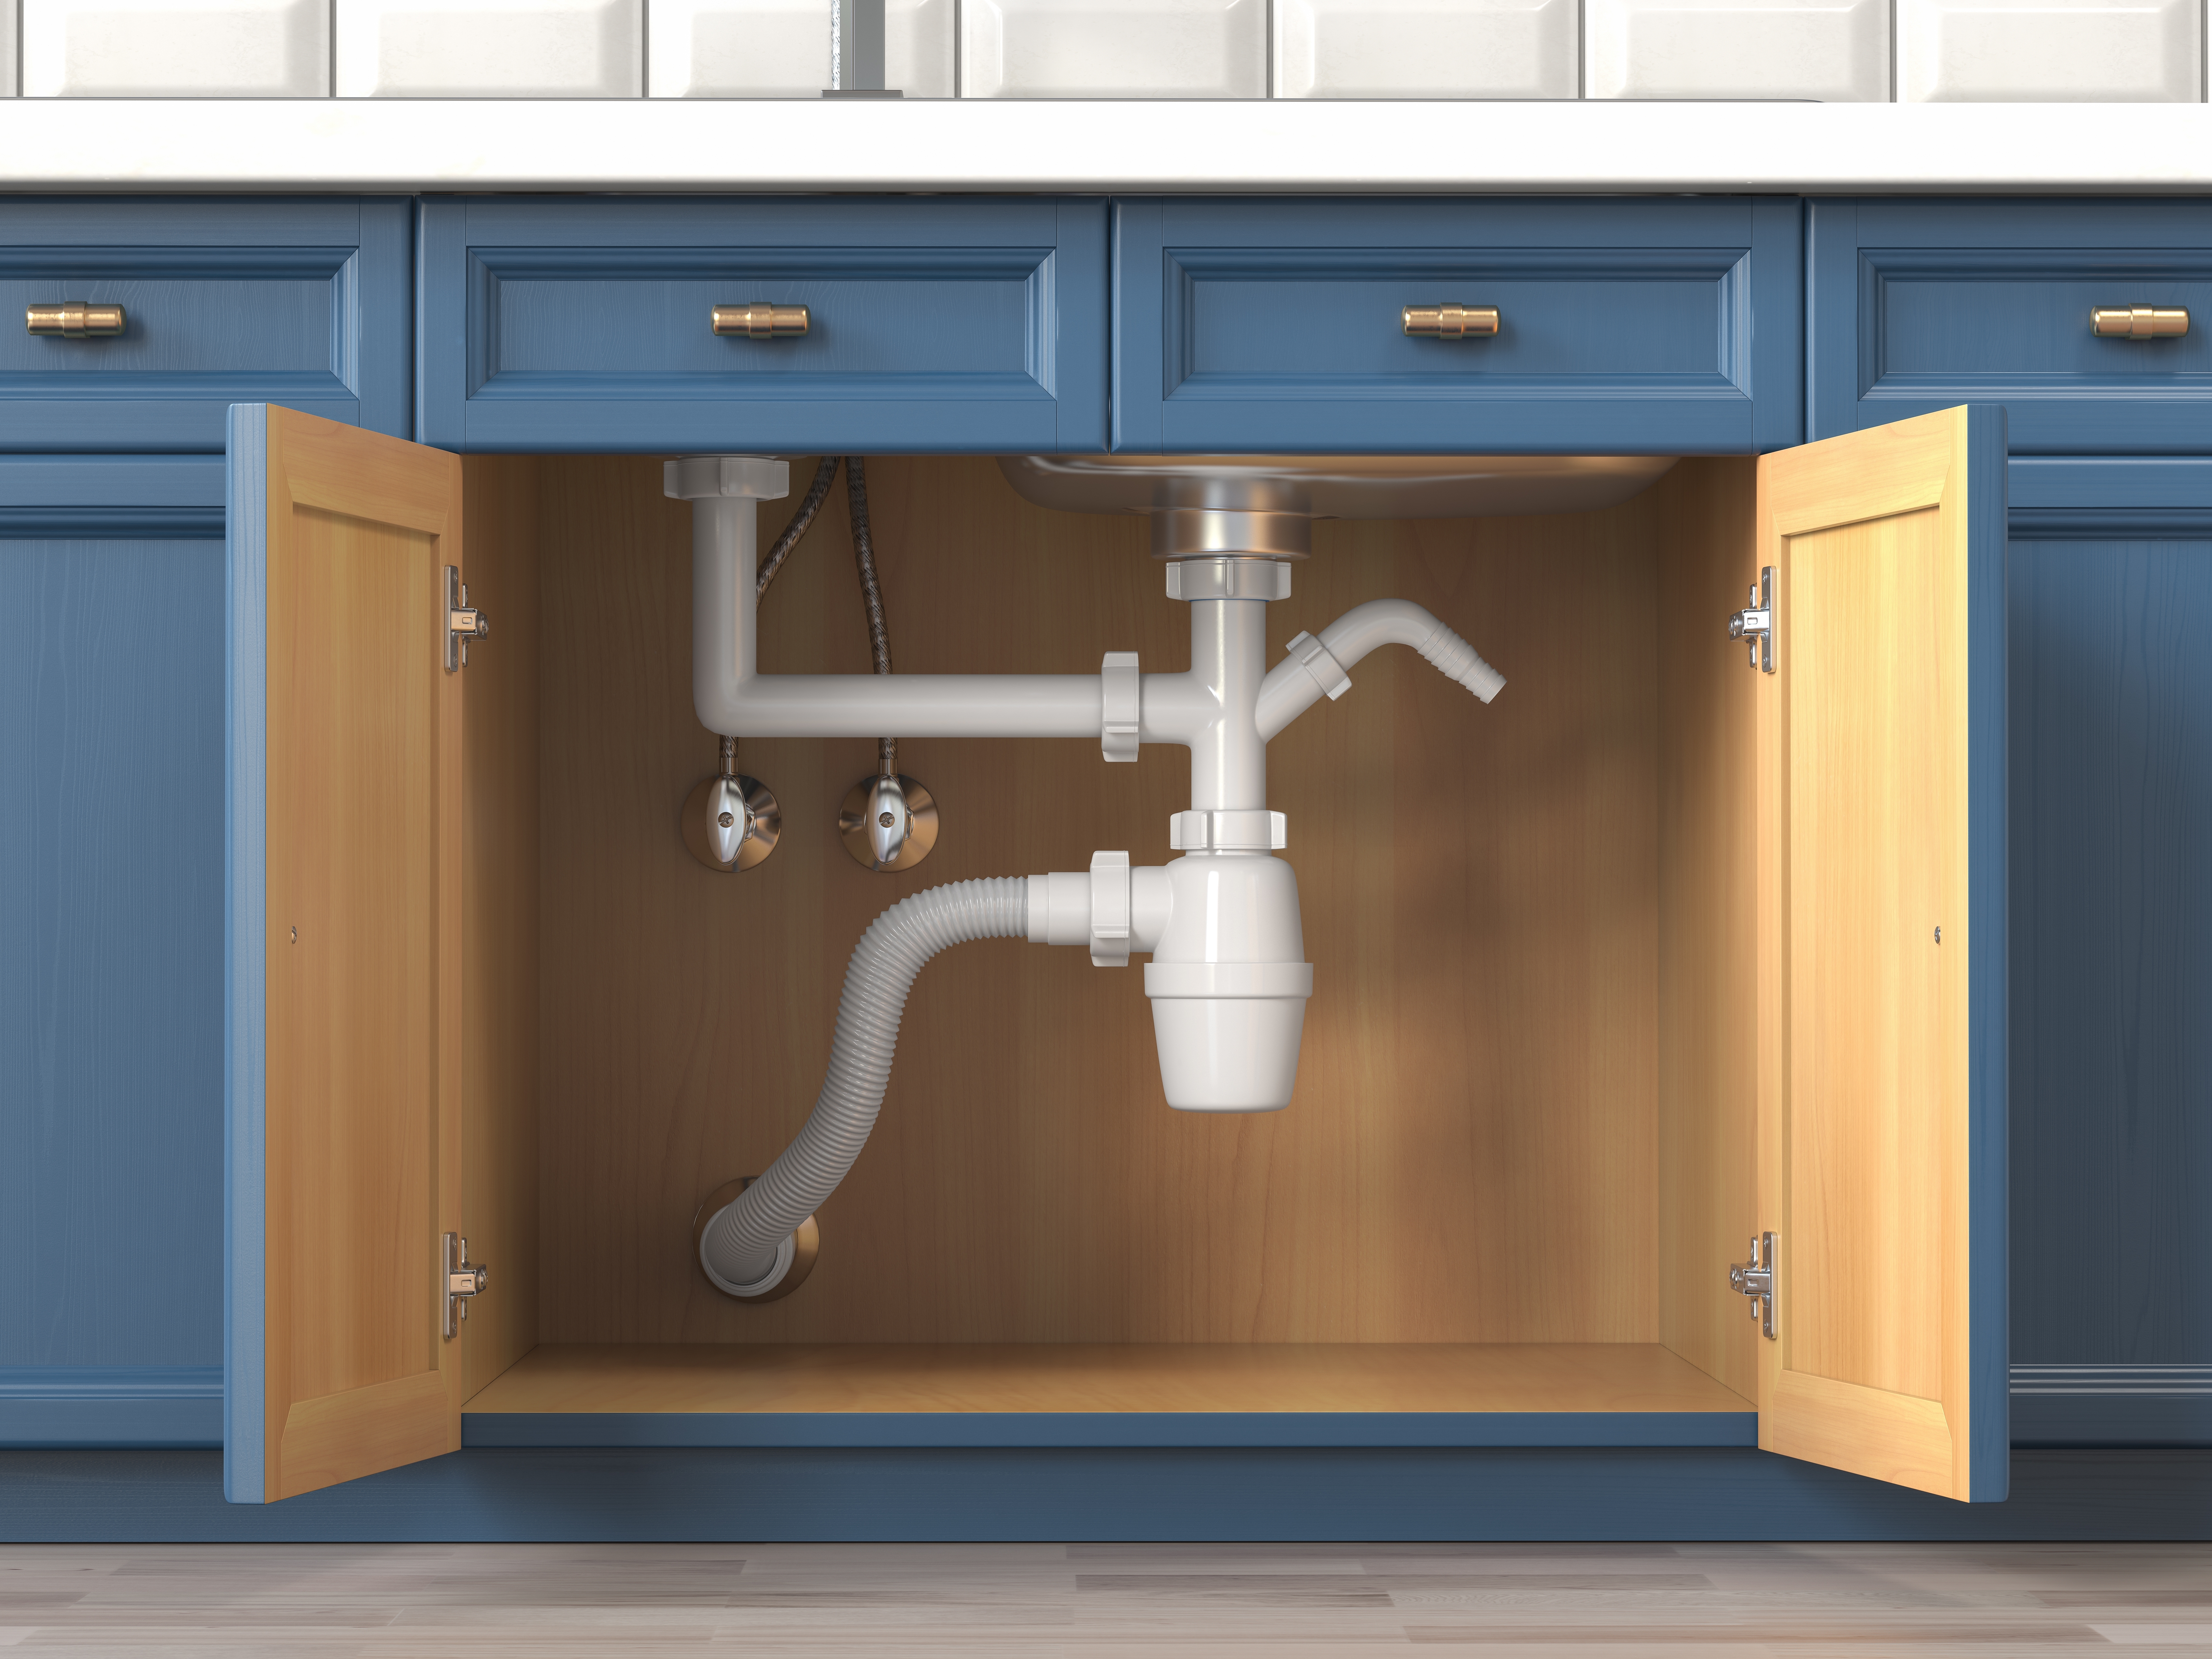 Pipes under a kitchen sink | Source: Shutterstock